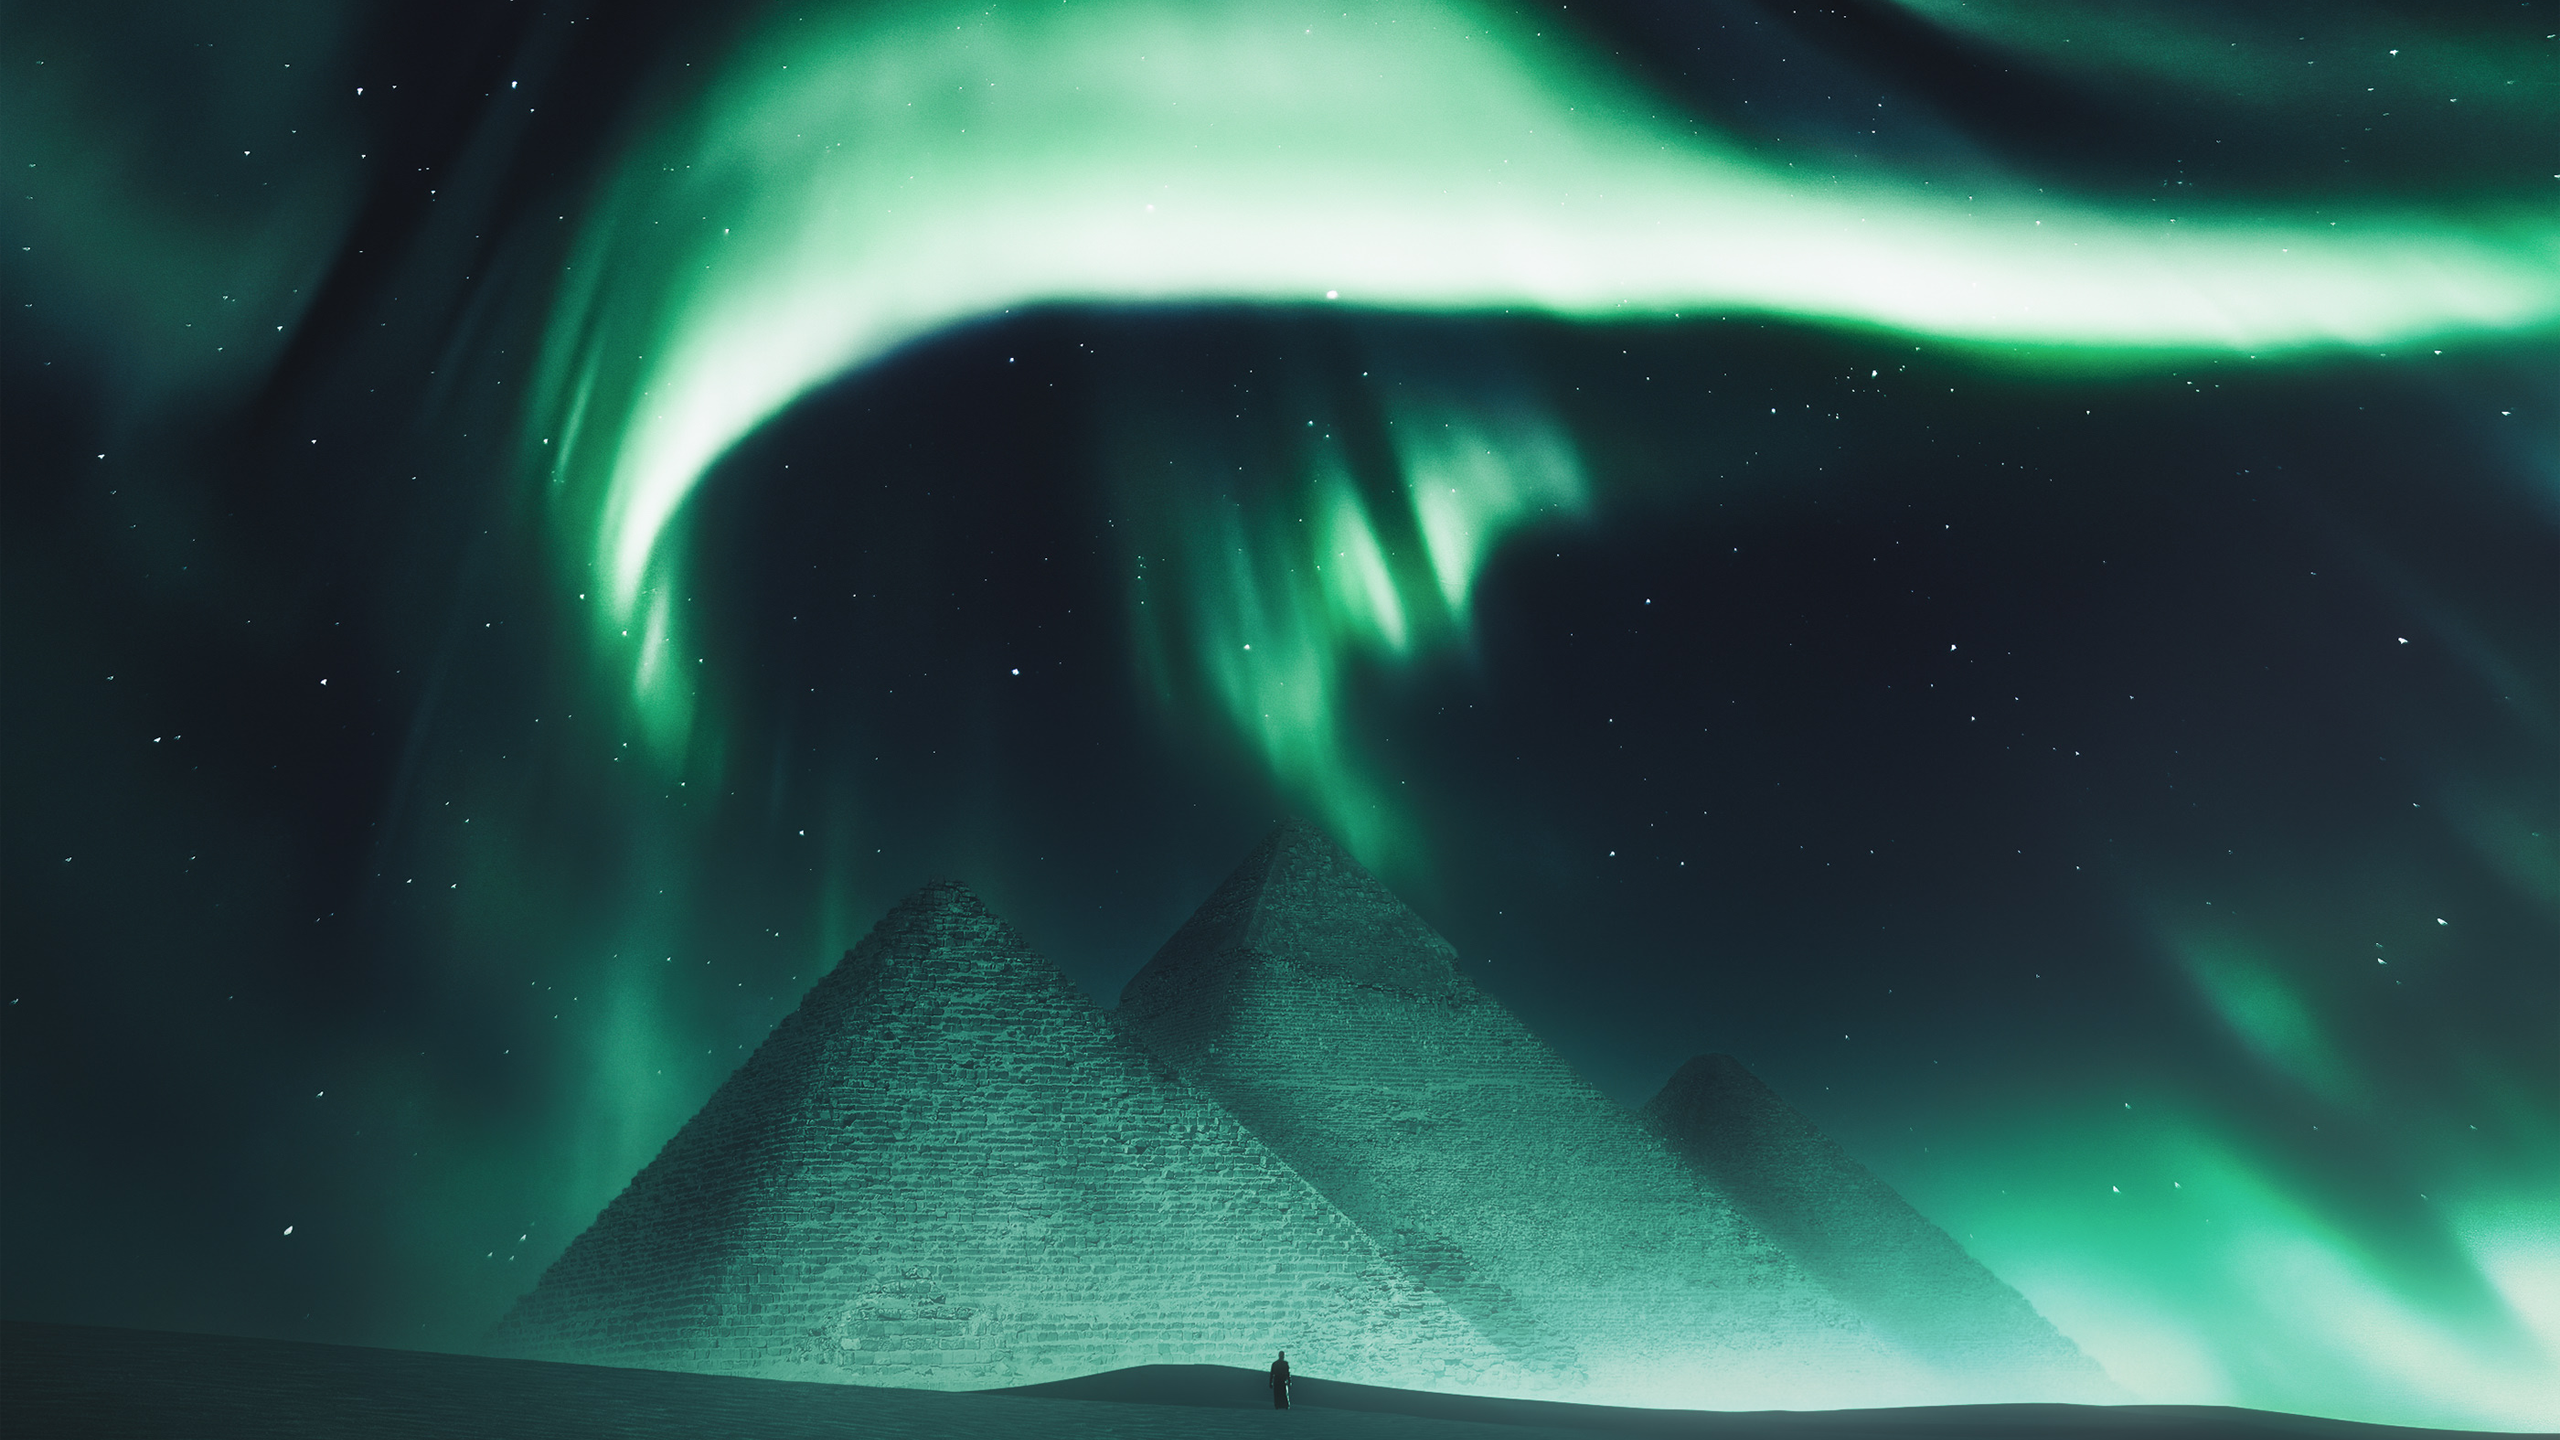 Digital Art Artwork Digital Egypt Pyramid Architecture Aurorae Sky Sand Night Nightscape Landscape S 2560x1440